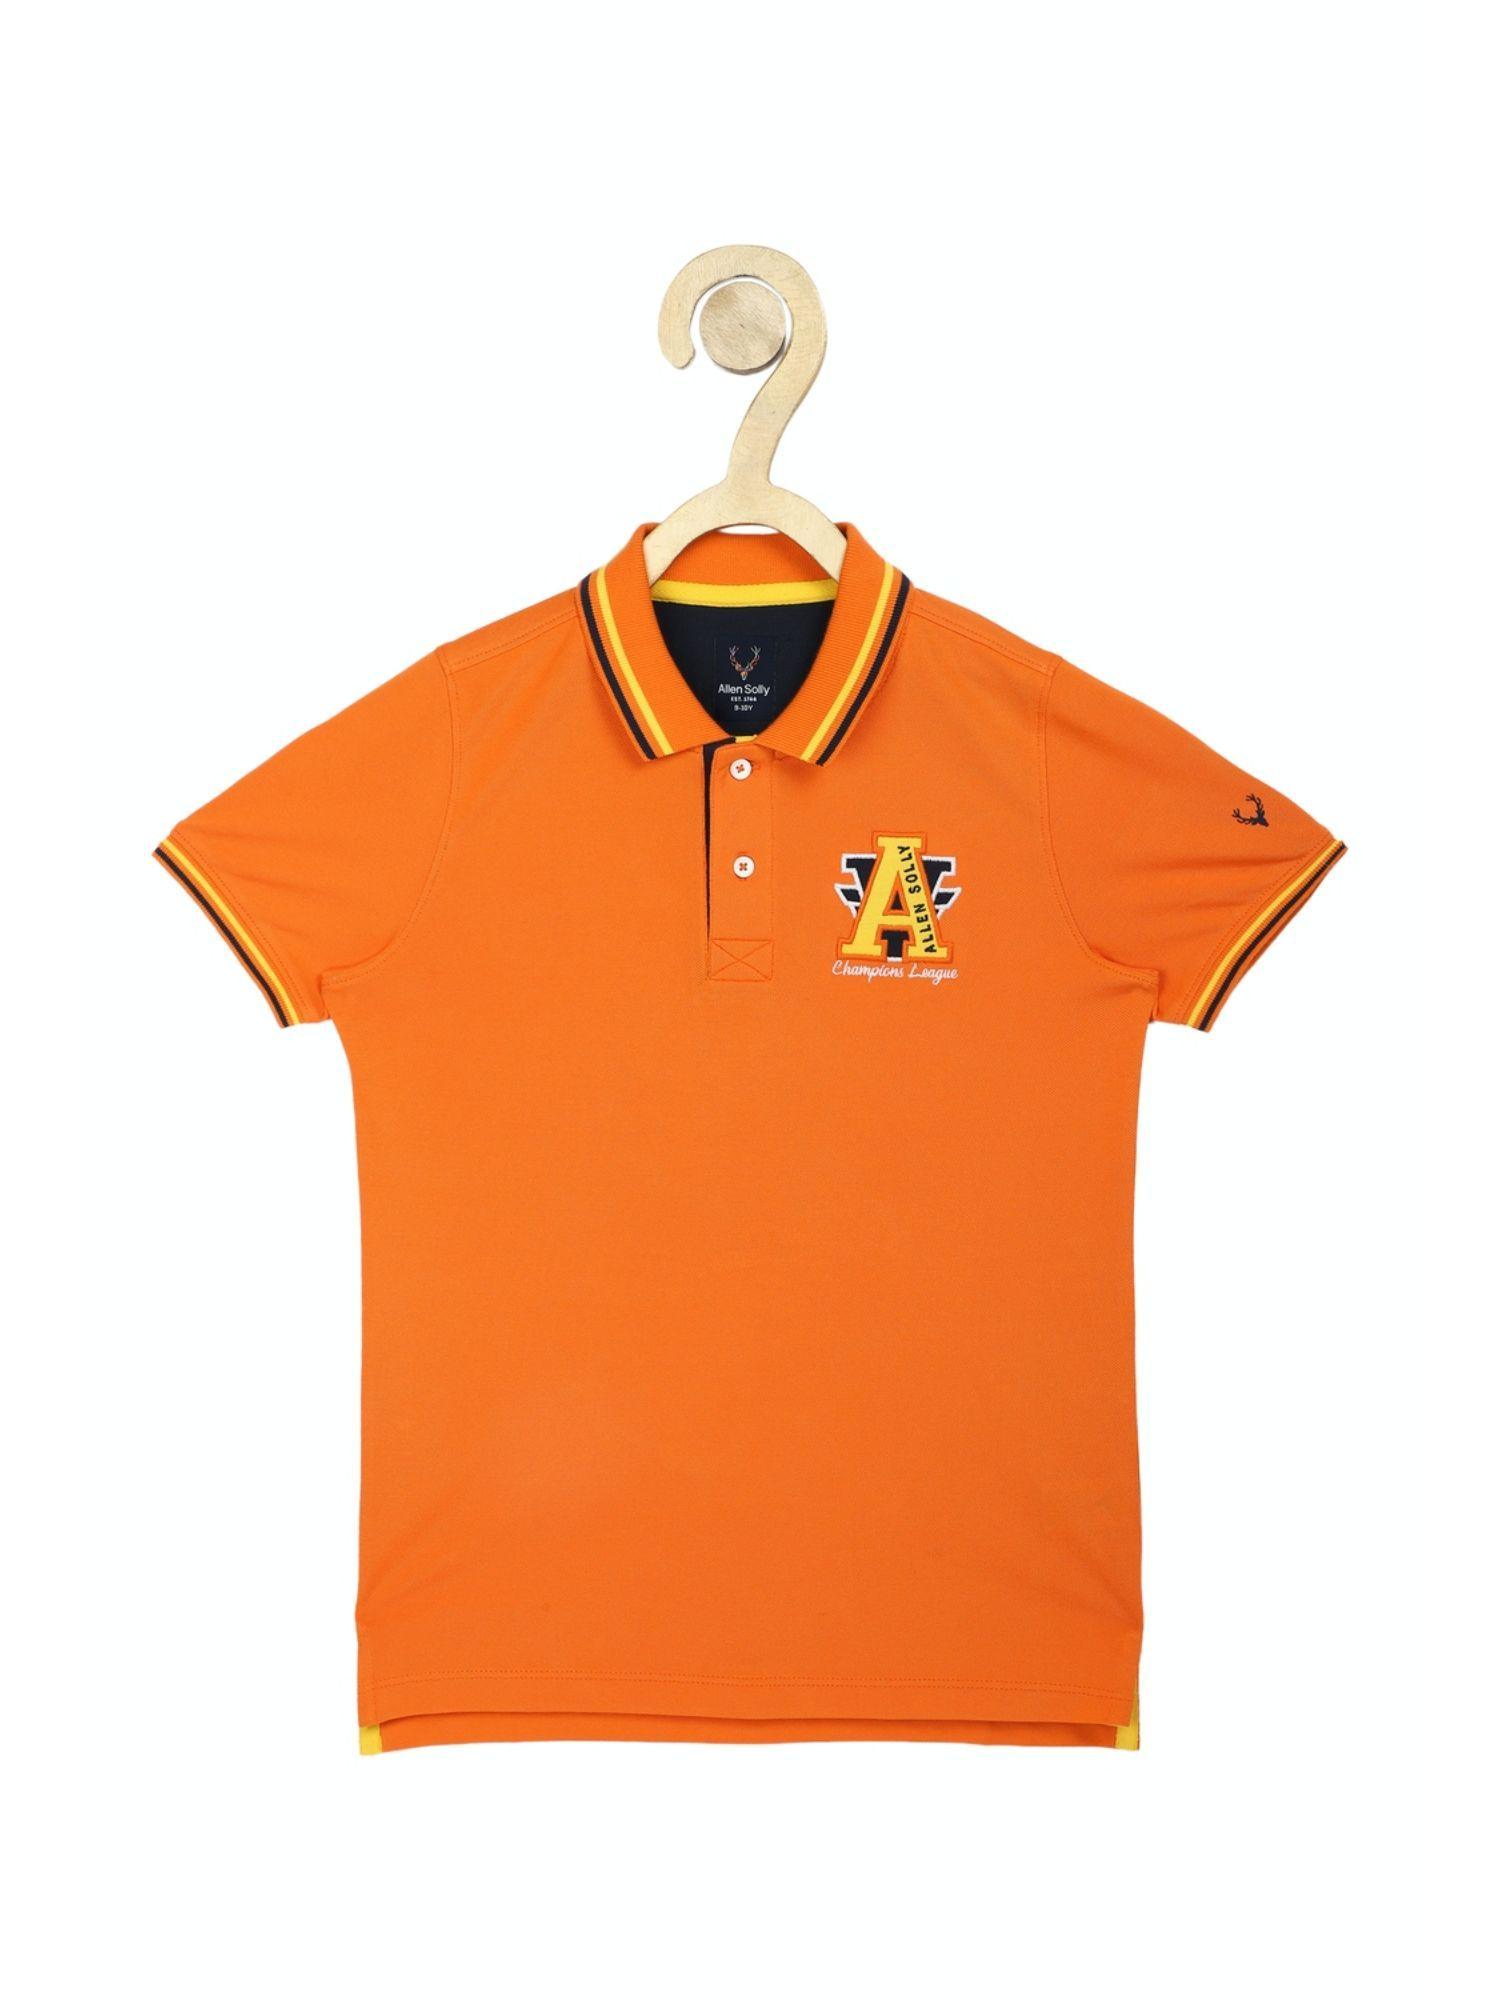 boys orange regular fit solid polo neck t-shirt